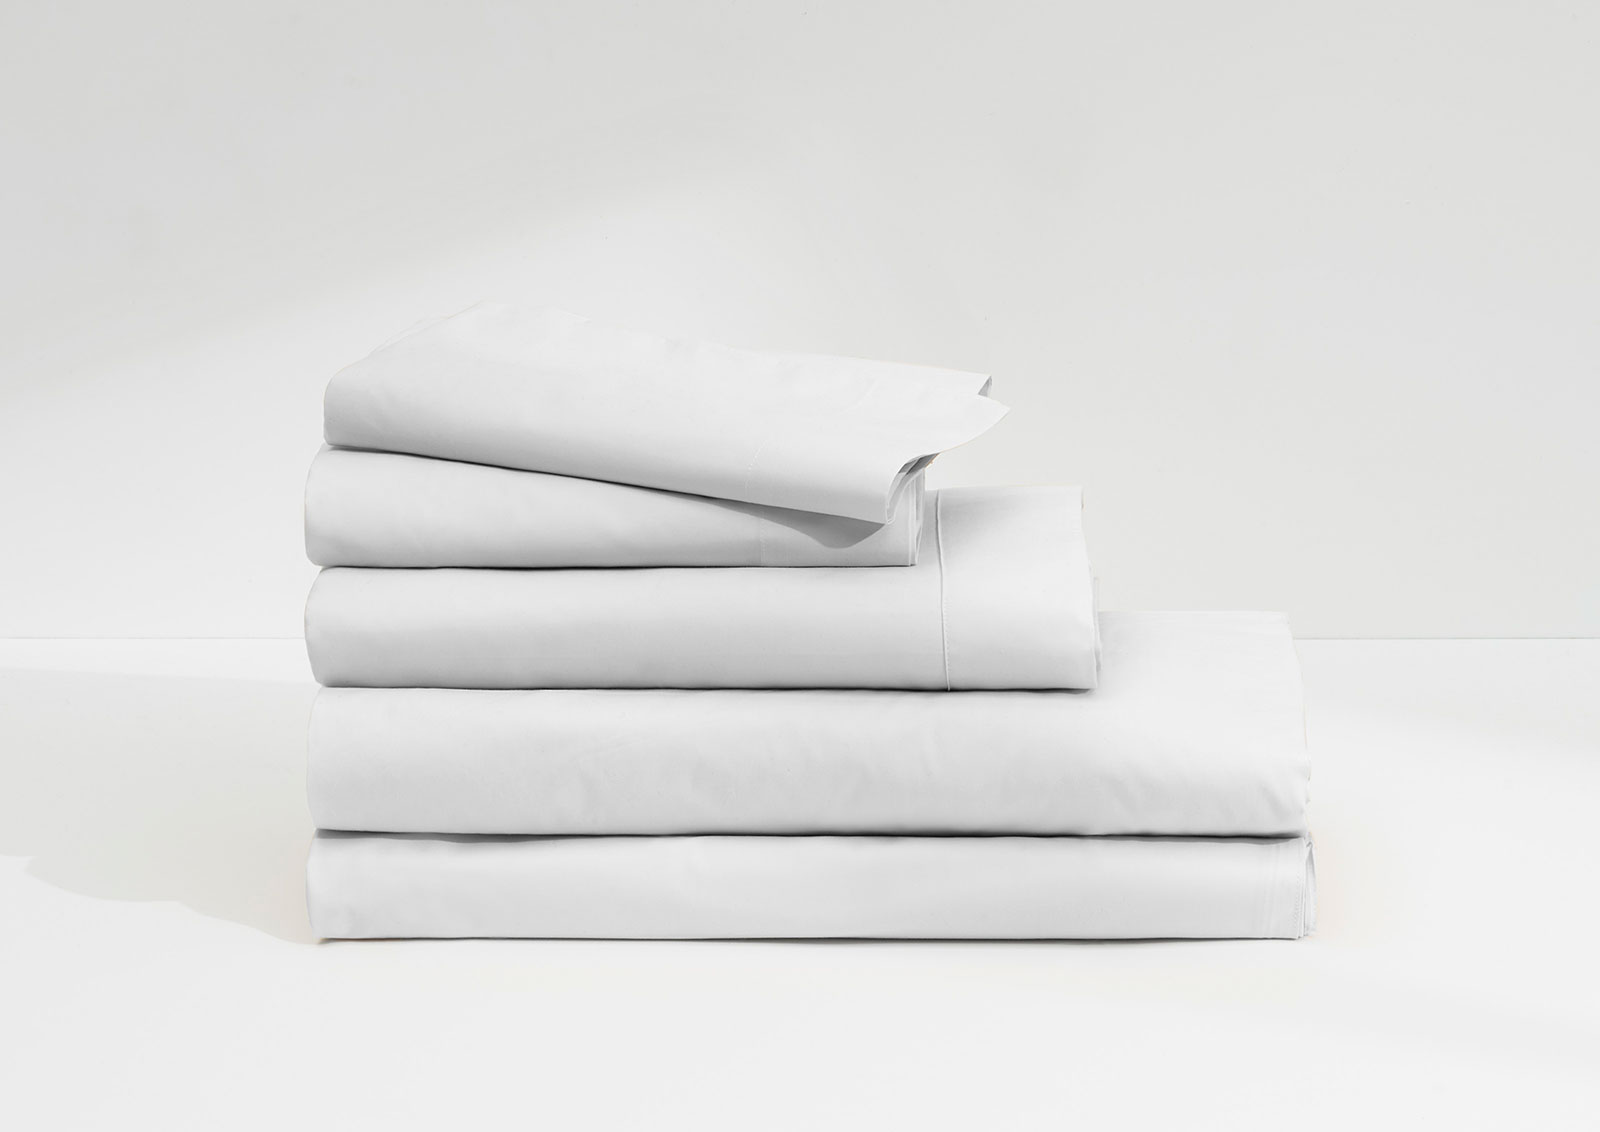 New Casper Supima Cotton Sheet Set Twin WHITE GREY GRAY THE SHEETS NWT in BOX 